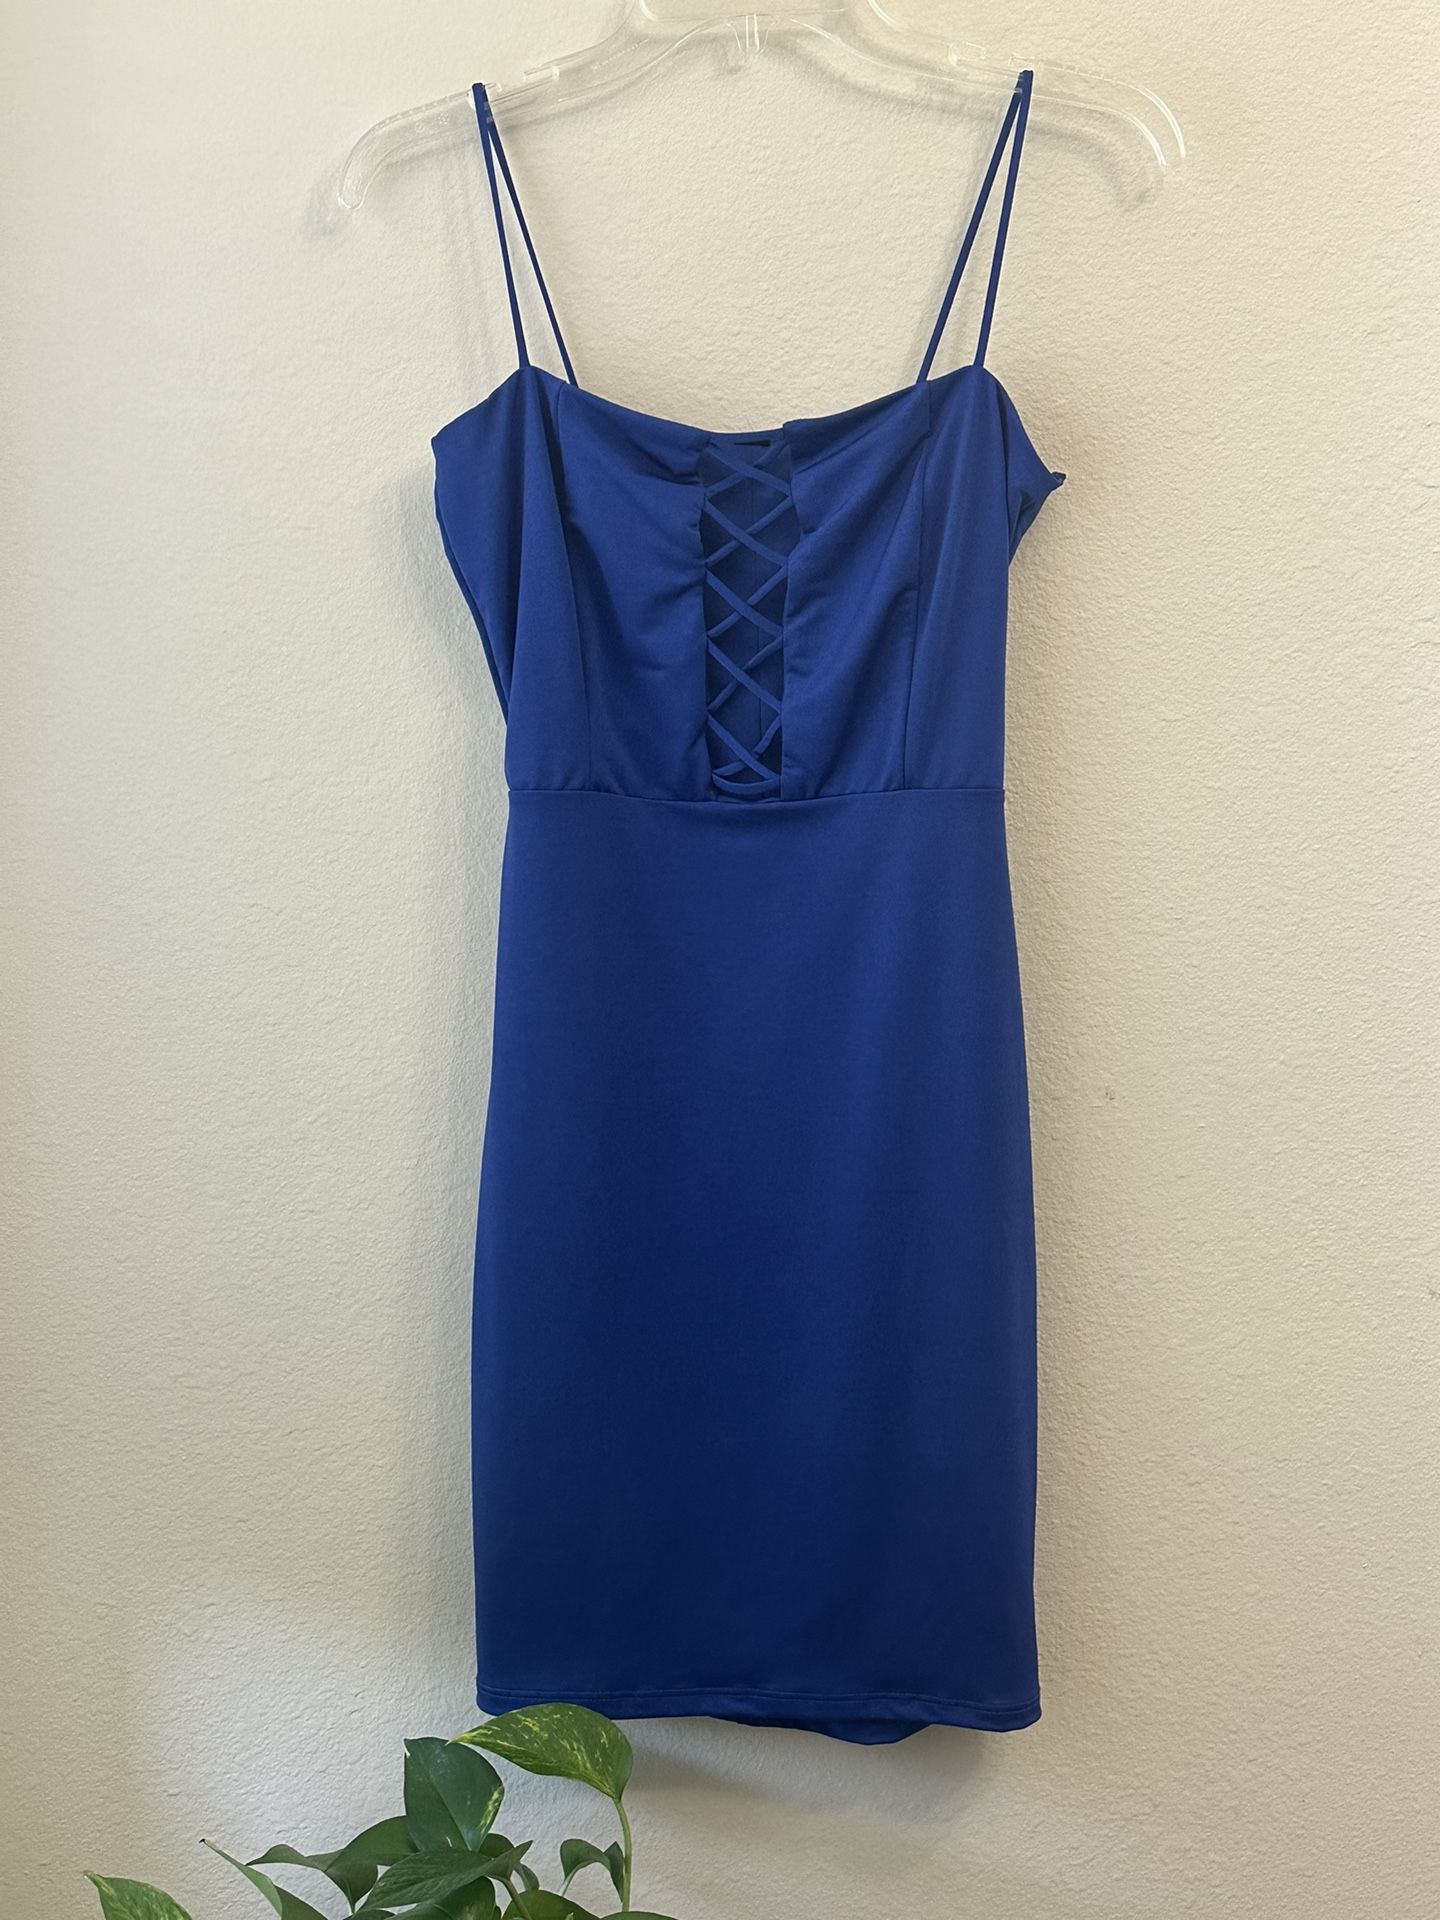 Women’s Spaghetti Strap Hollow See Through Blue Dress Small